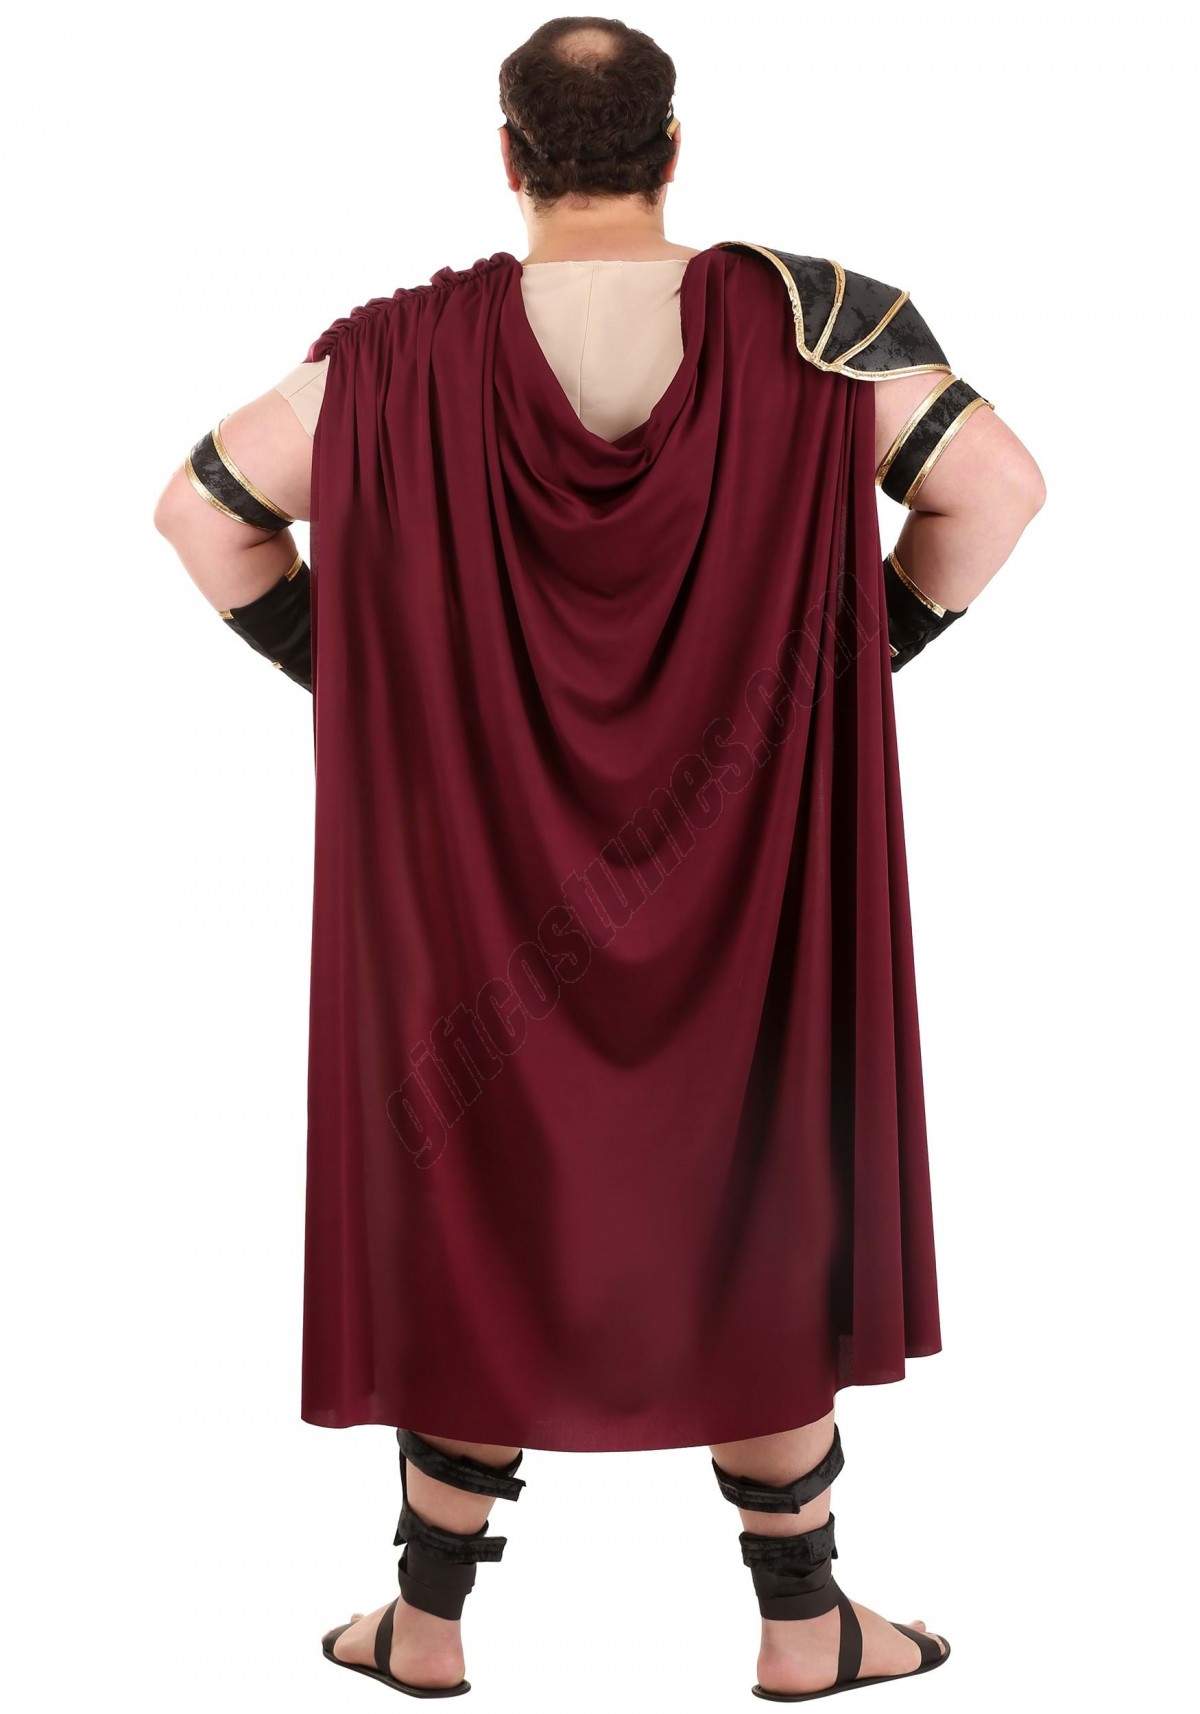 Plus Size Roman Gladiator Costume Promotions - -9